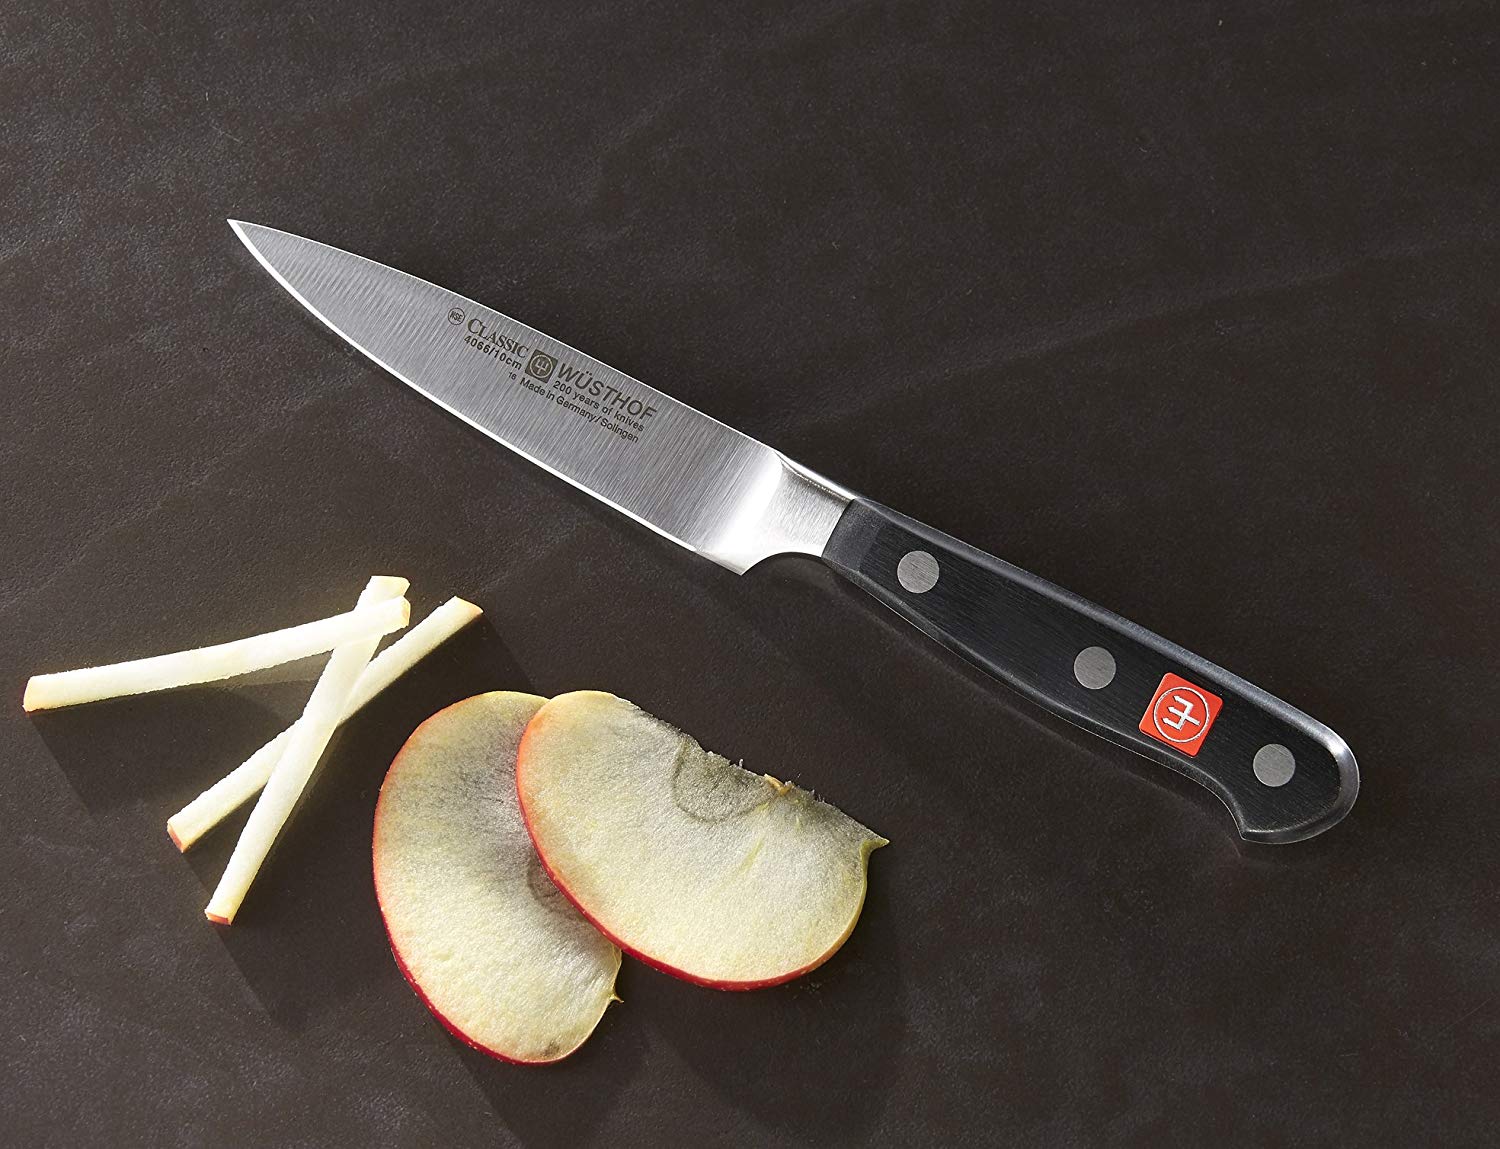 Wüsthof Classic 4 1/2 Asian Utility Knife